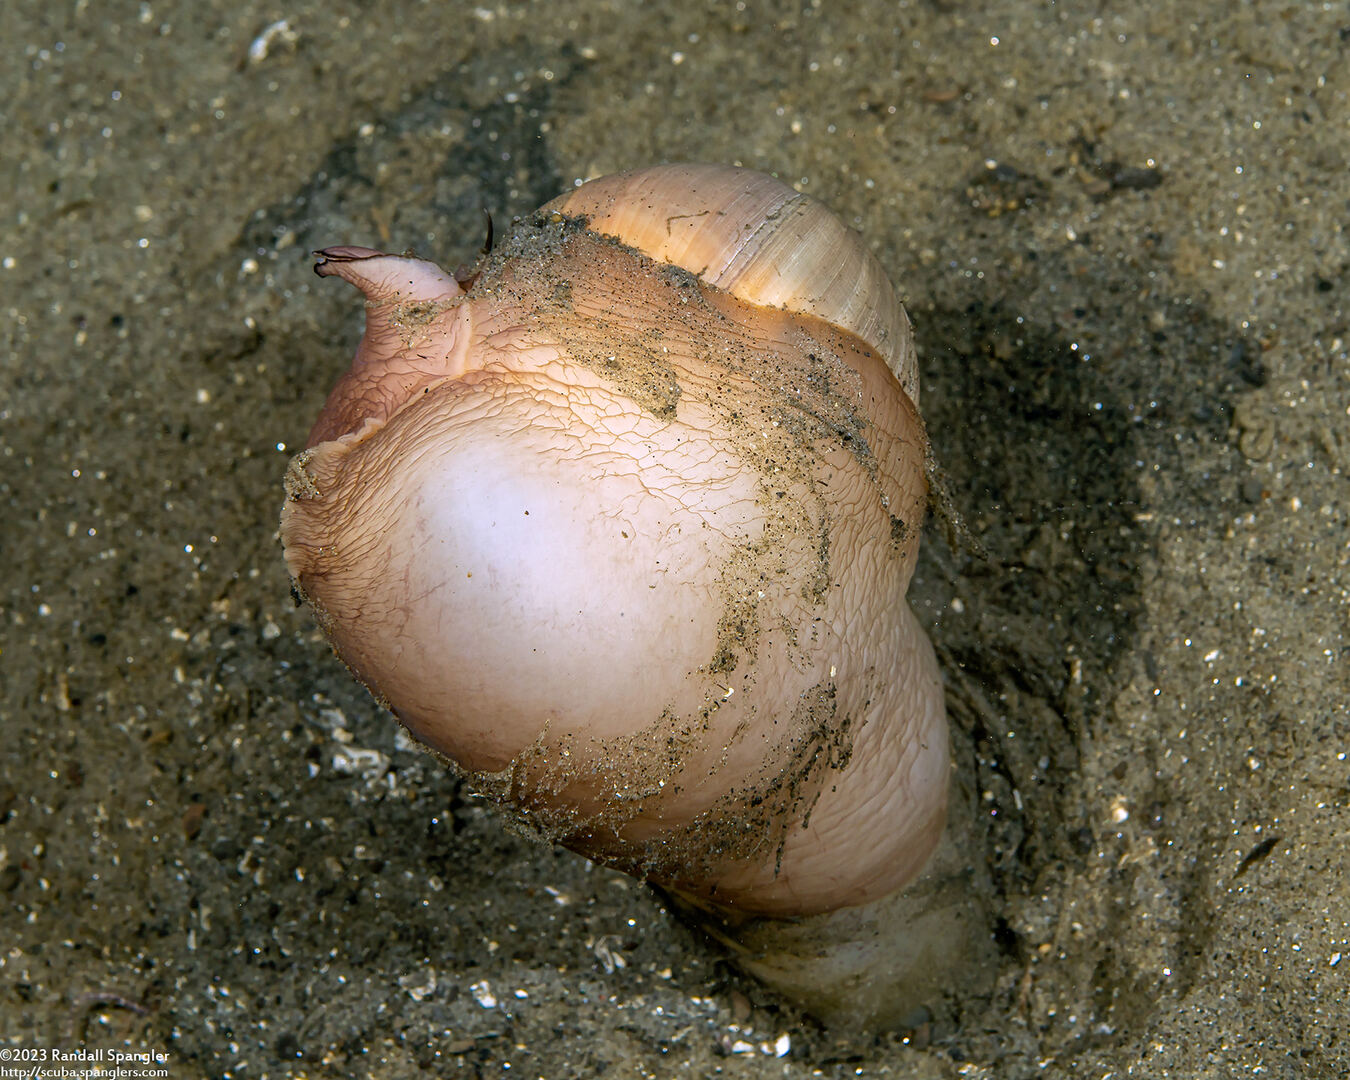 Neverita lewisii (Lewis's Moon Snail); Eating a geoduck